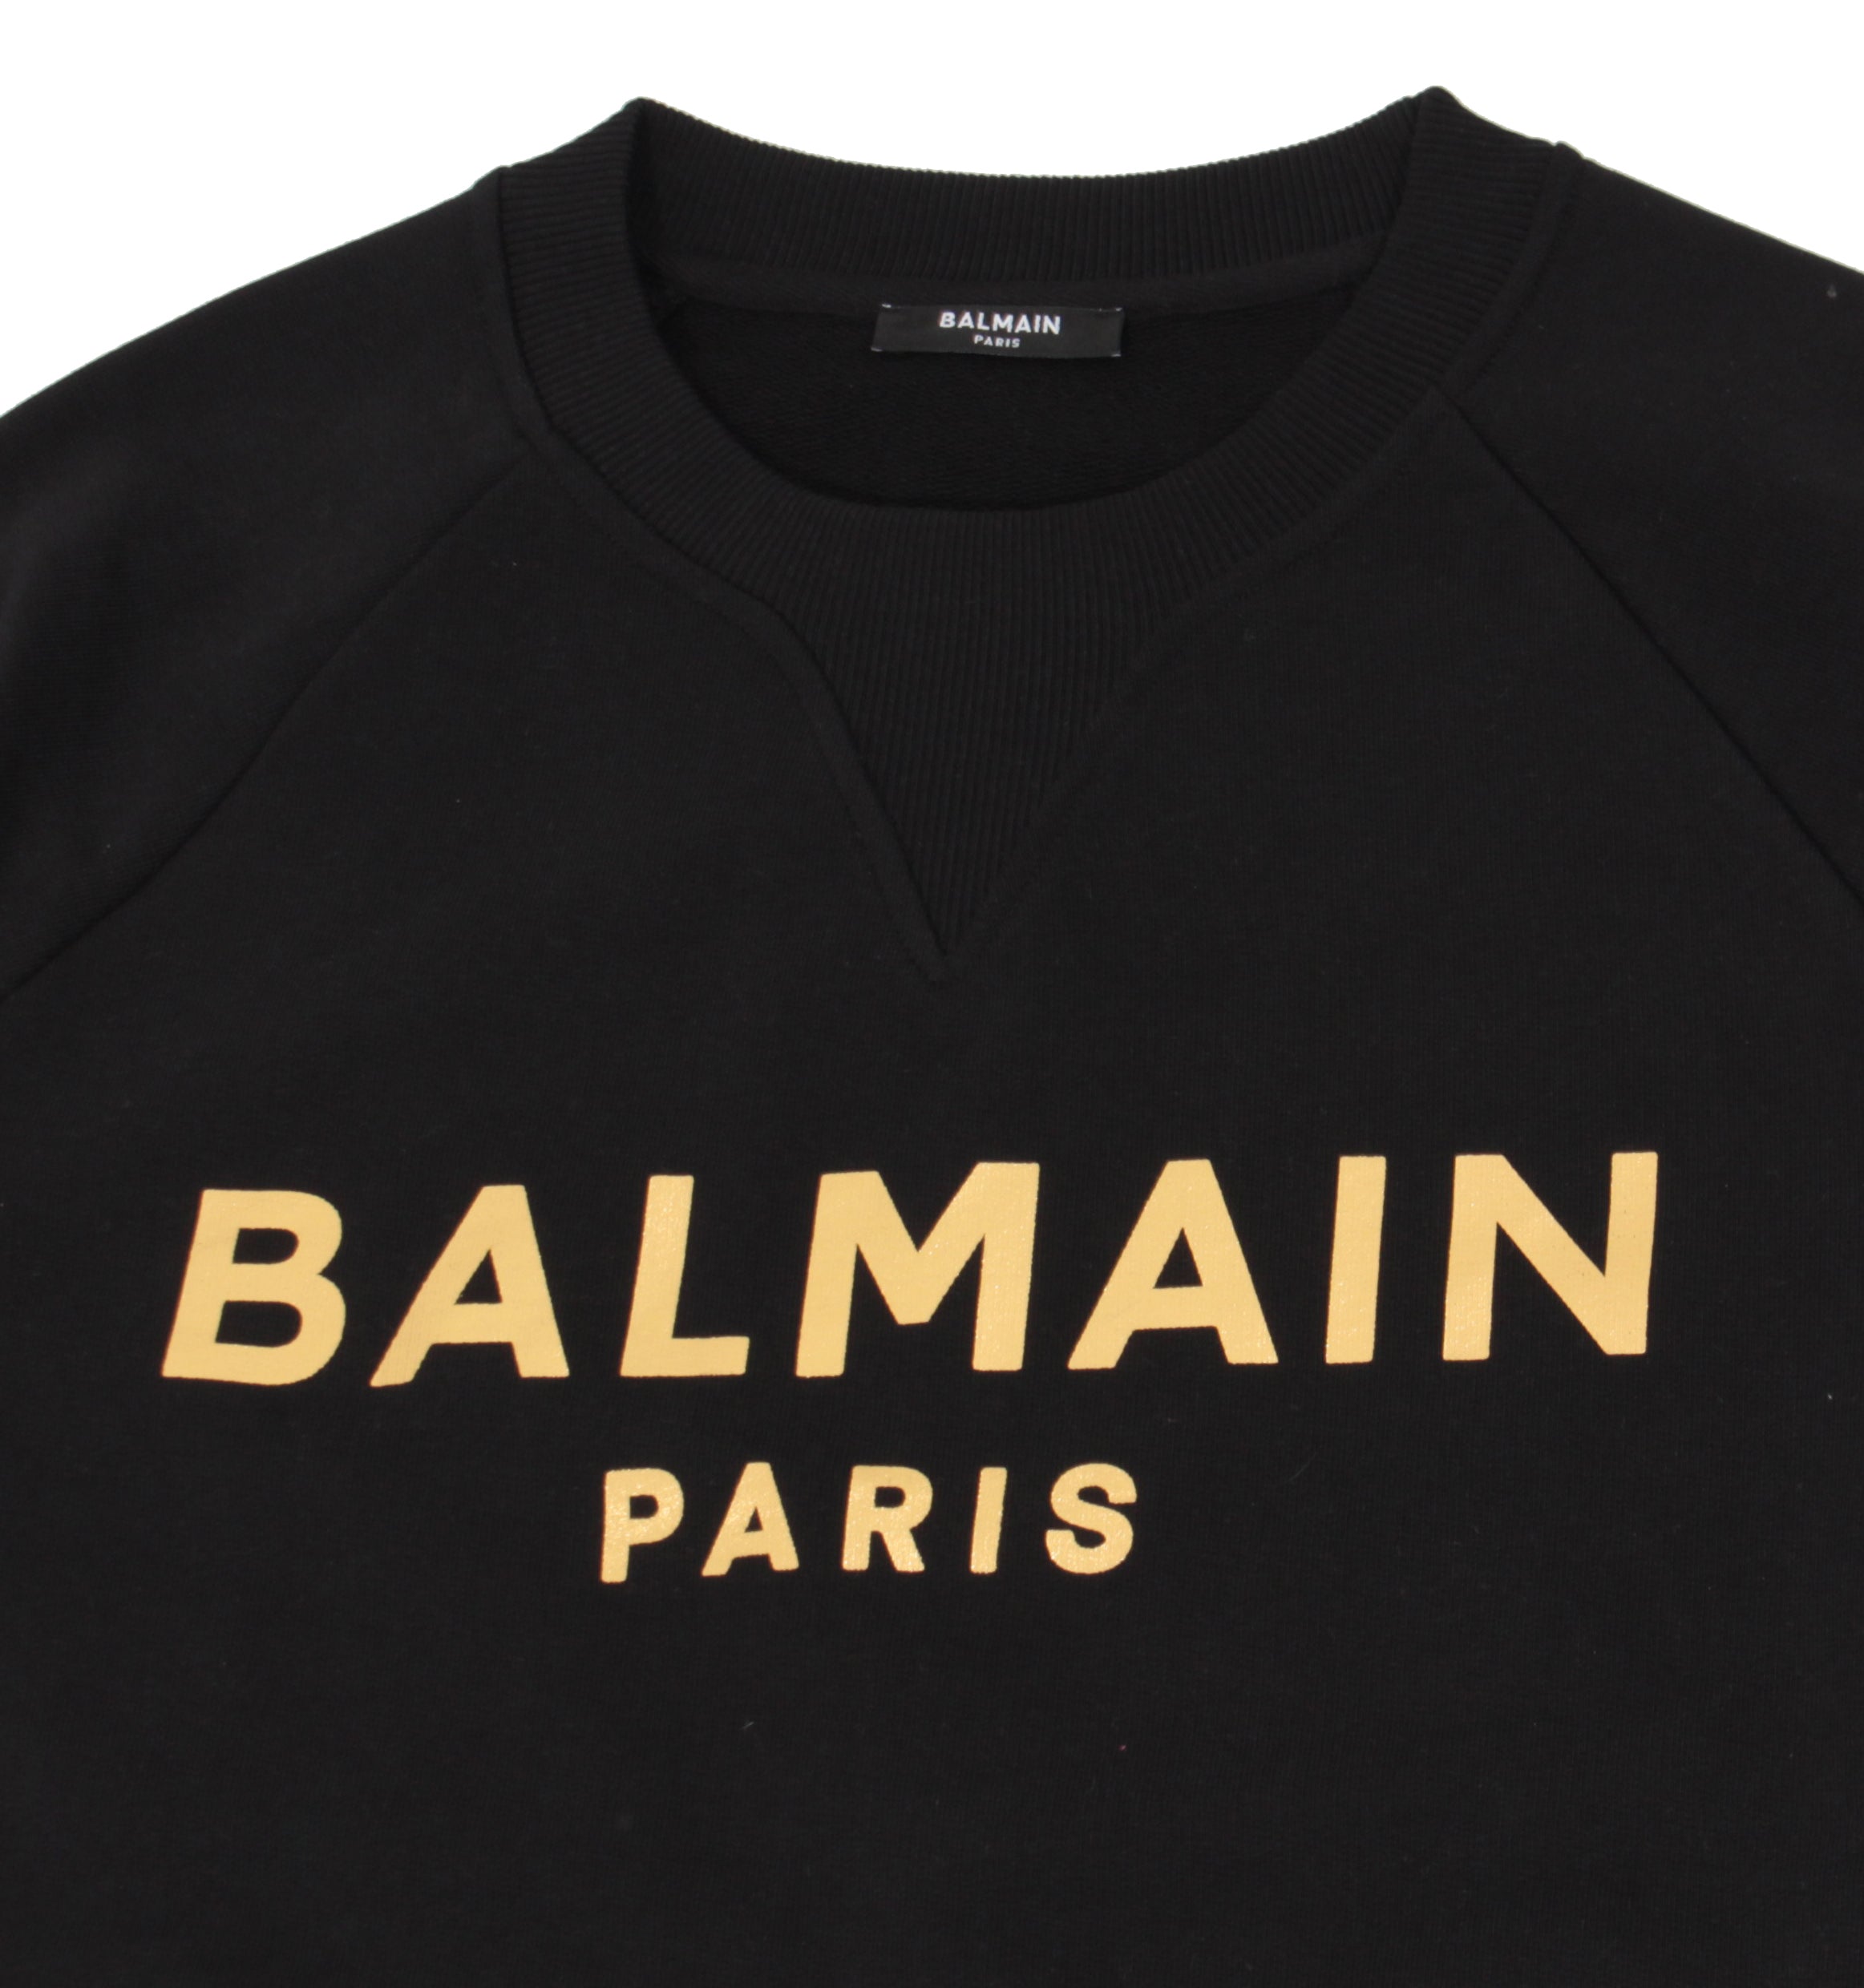 Balmain Paris Oversized All Over Printed Sweatshirt